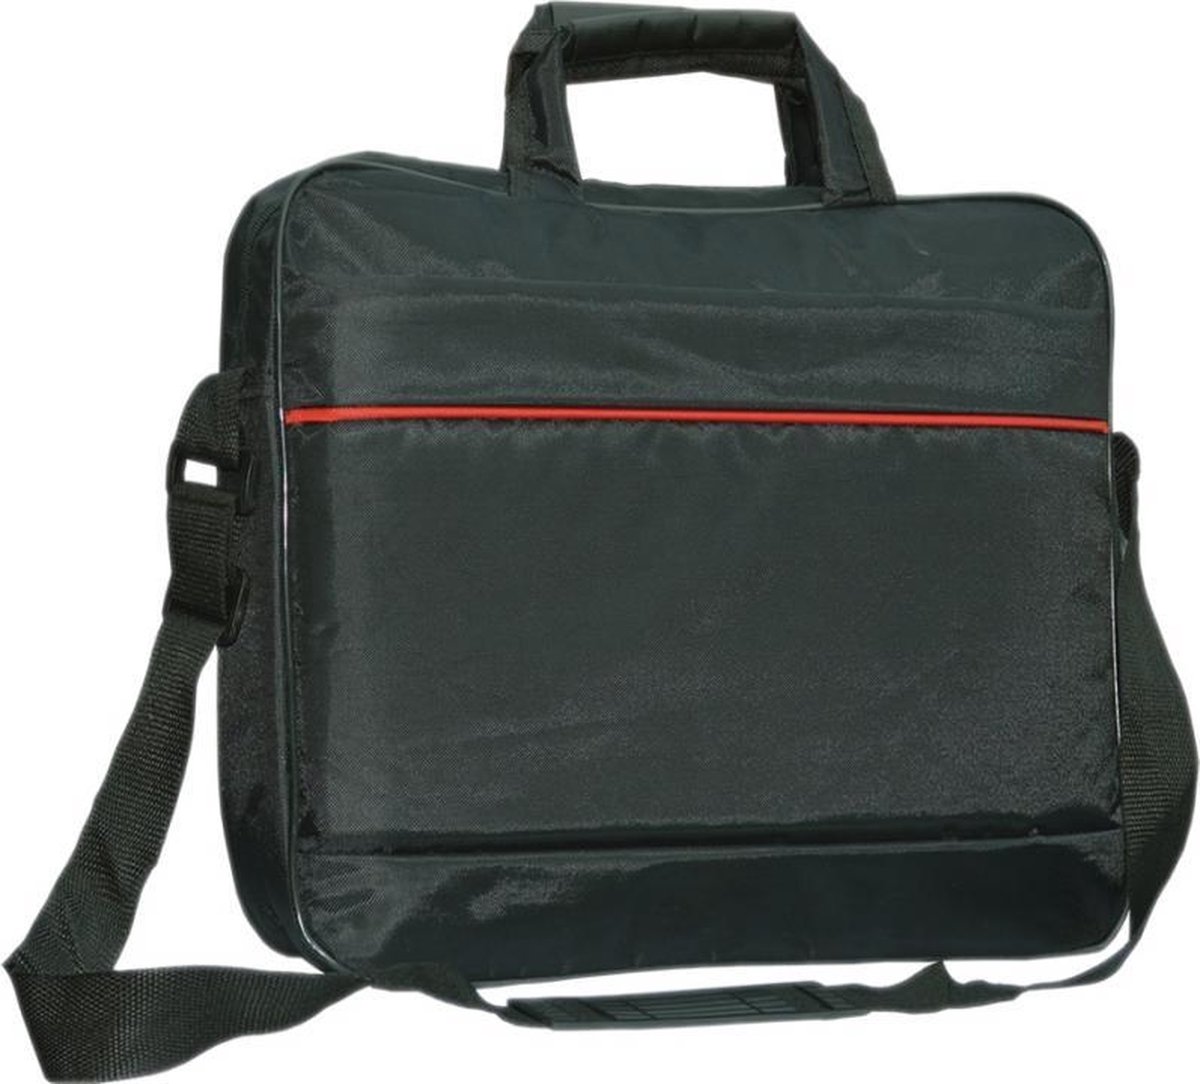 Hp Chromebook 14 X004nd laptoptas messenger bag / schoudertas / tas , zwart , merk i12Cover